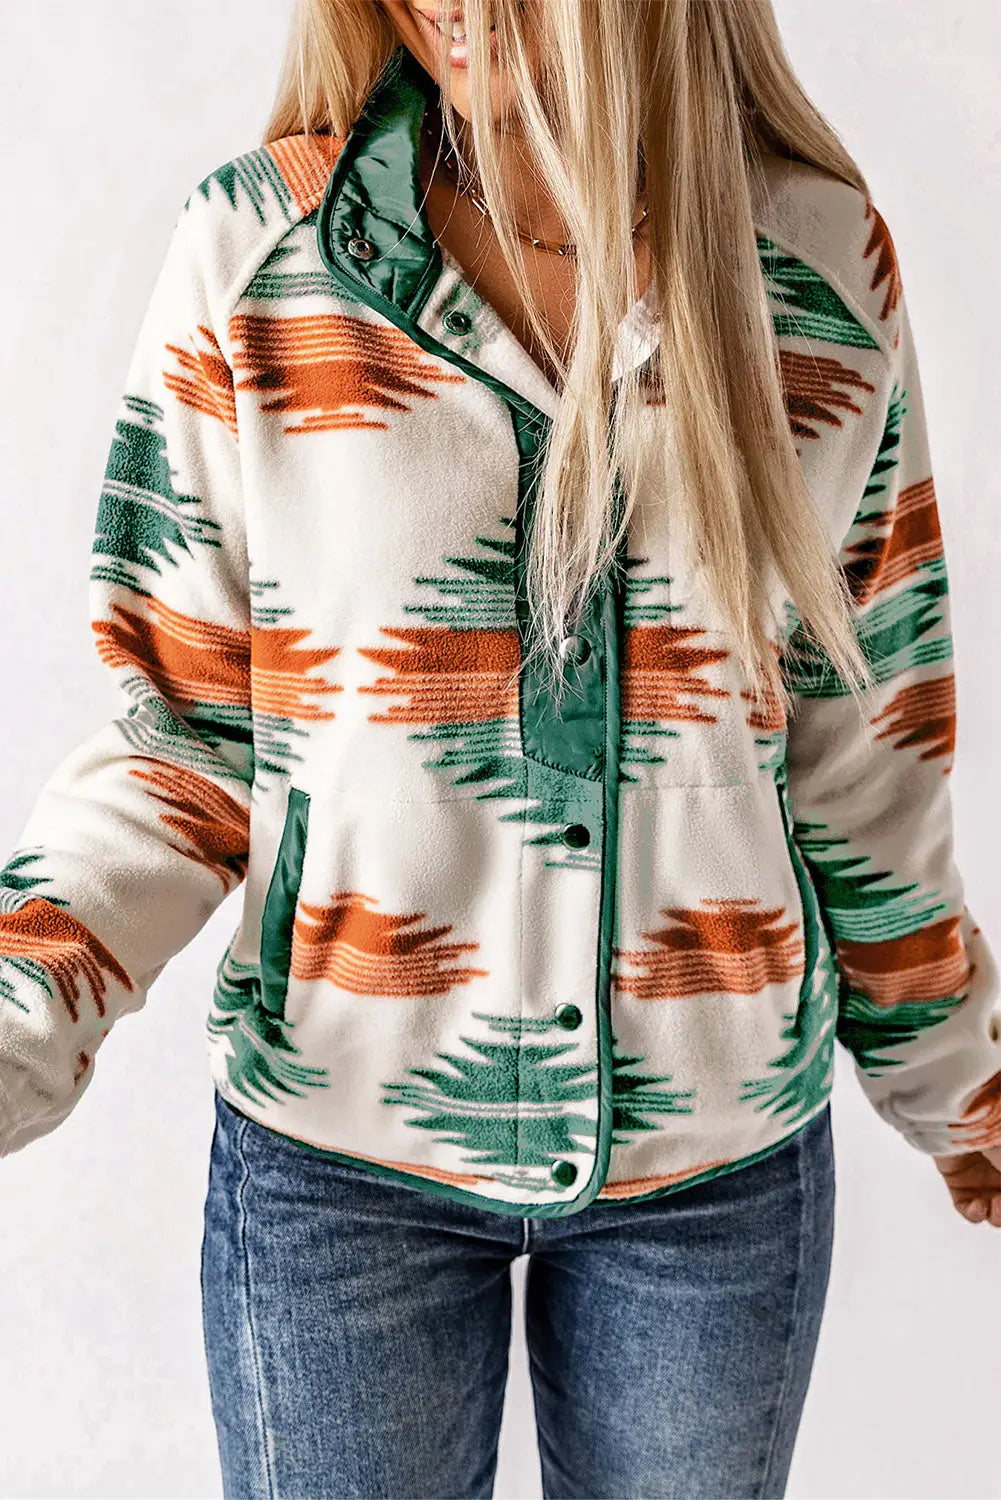 Multicolor fuzzy aztec western fashion vest jacket - multicolour1 / s / 100% polyester - outerwear